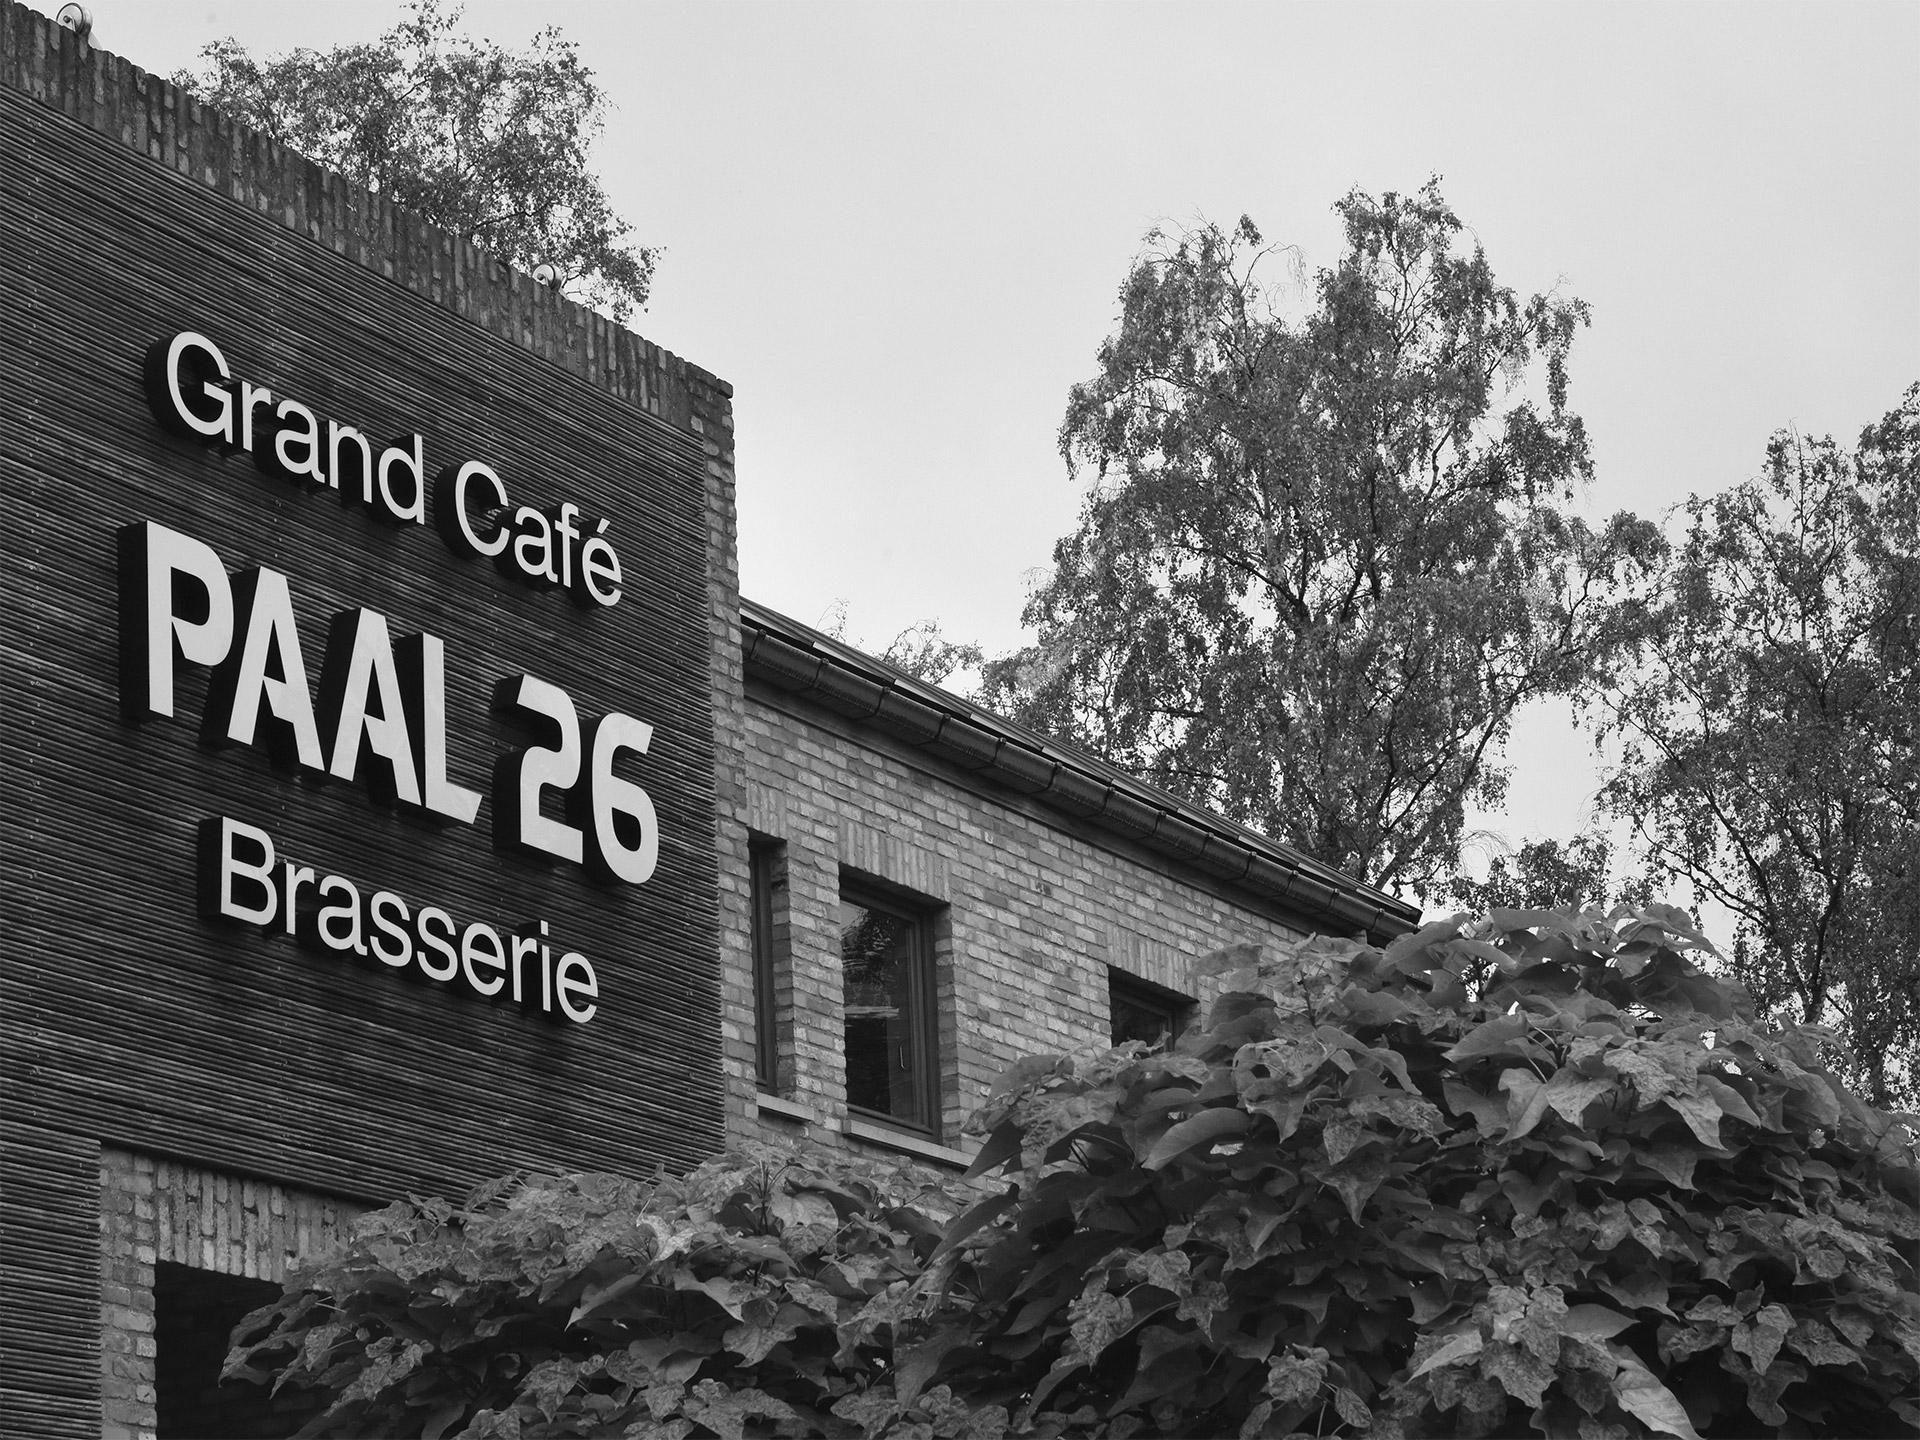 Home - Grand Café Paal 26